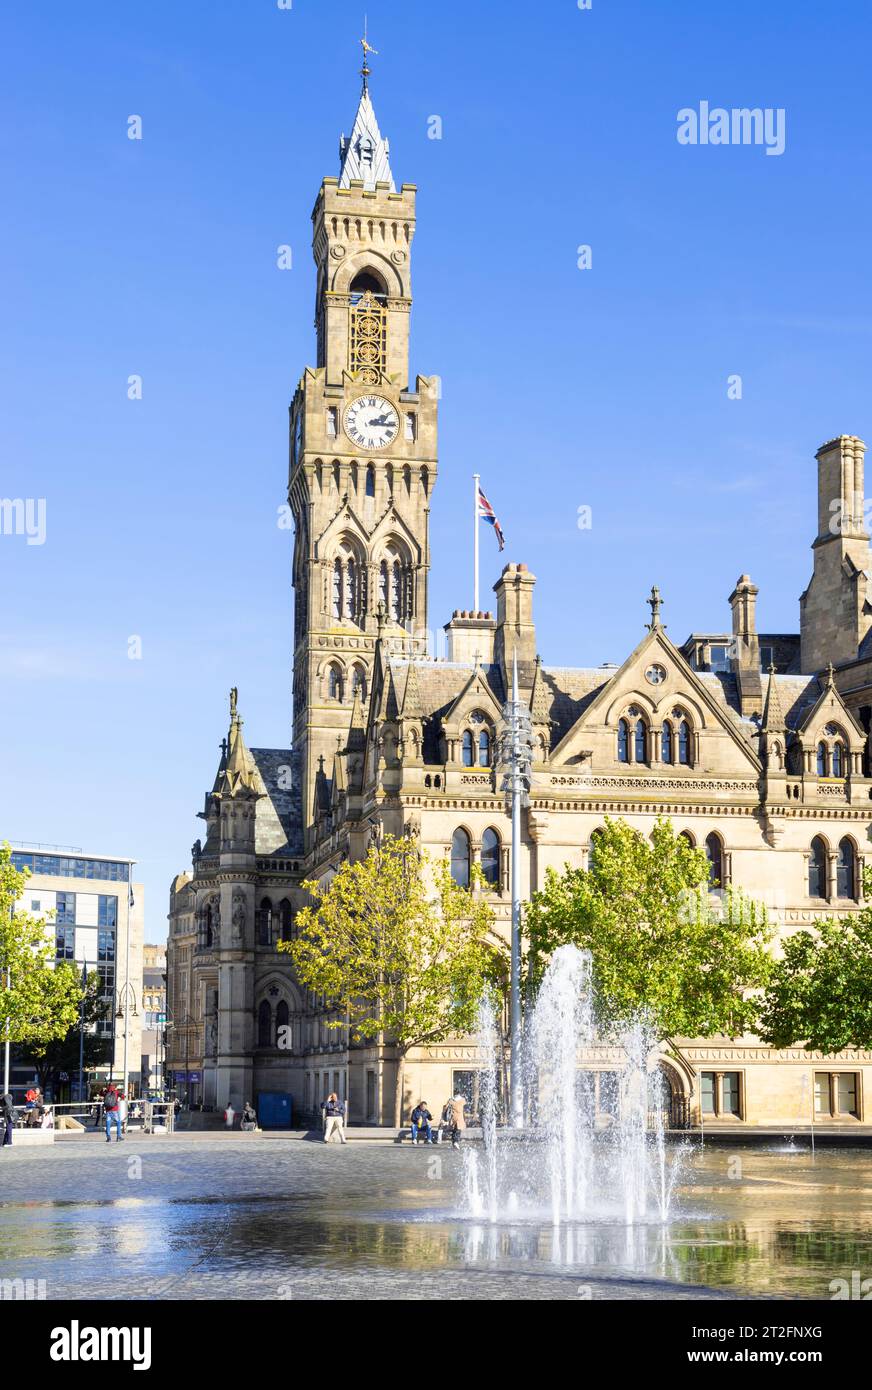 Bradford Town Hall clock tower or Bradford City Hall in Bradford city centre Centenary Square with fountains Bradford Yorkshire England UK GB Europe Stock Photo